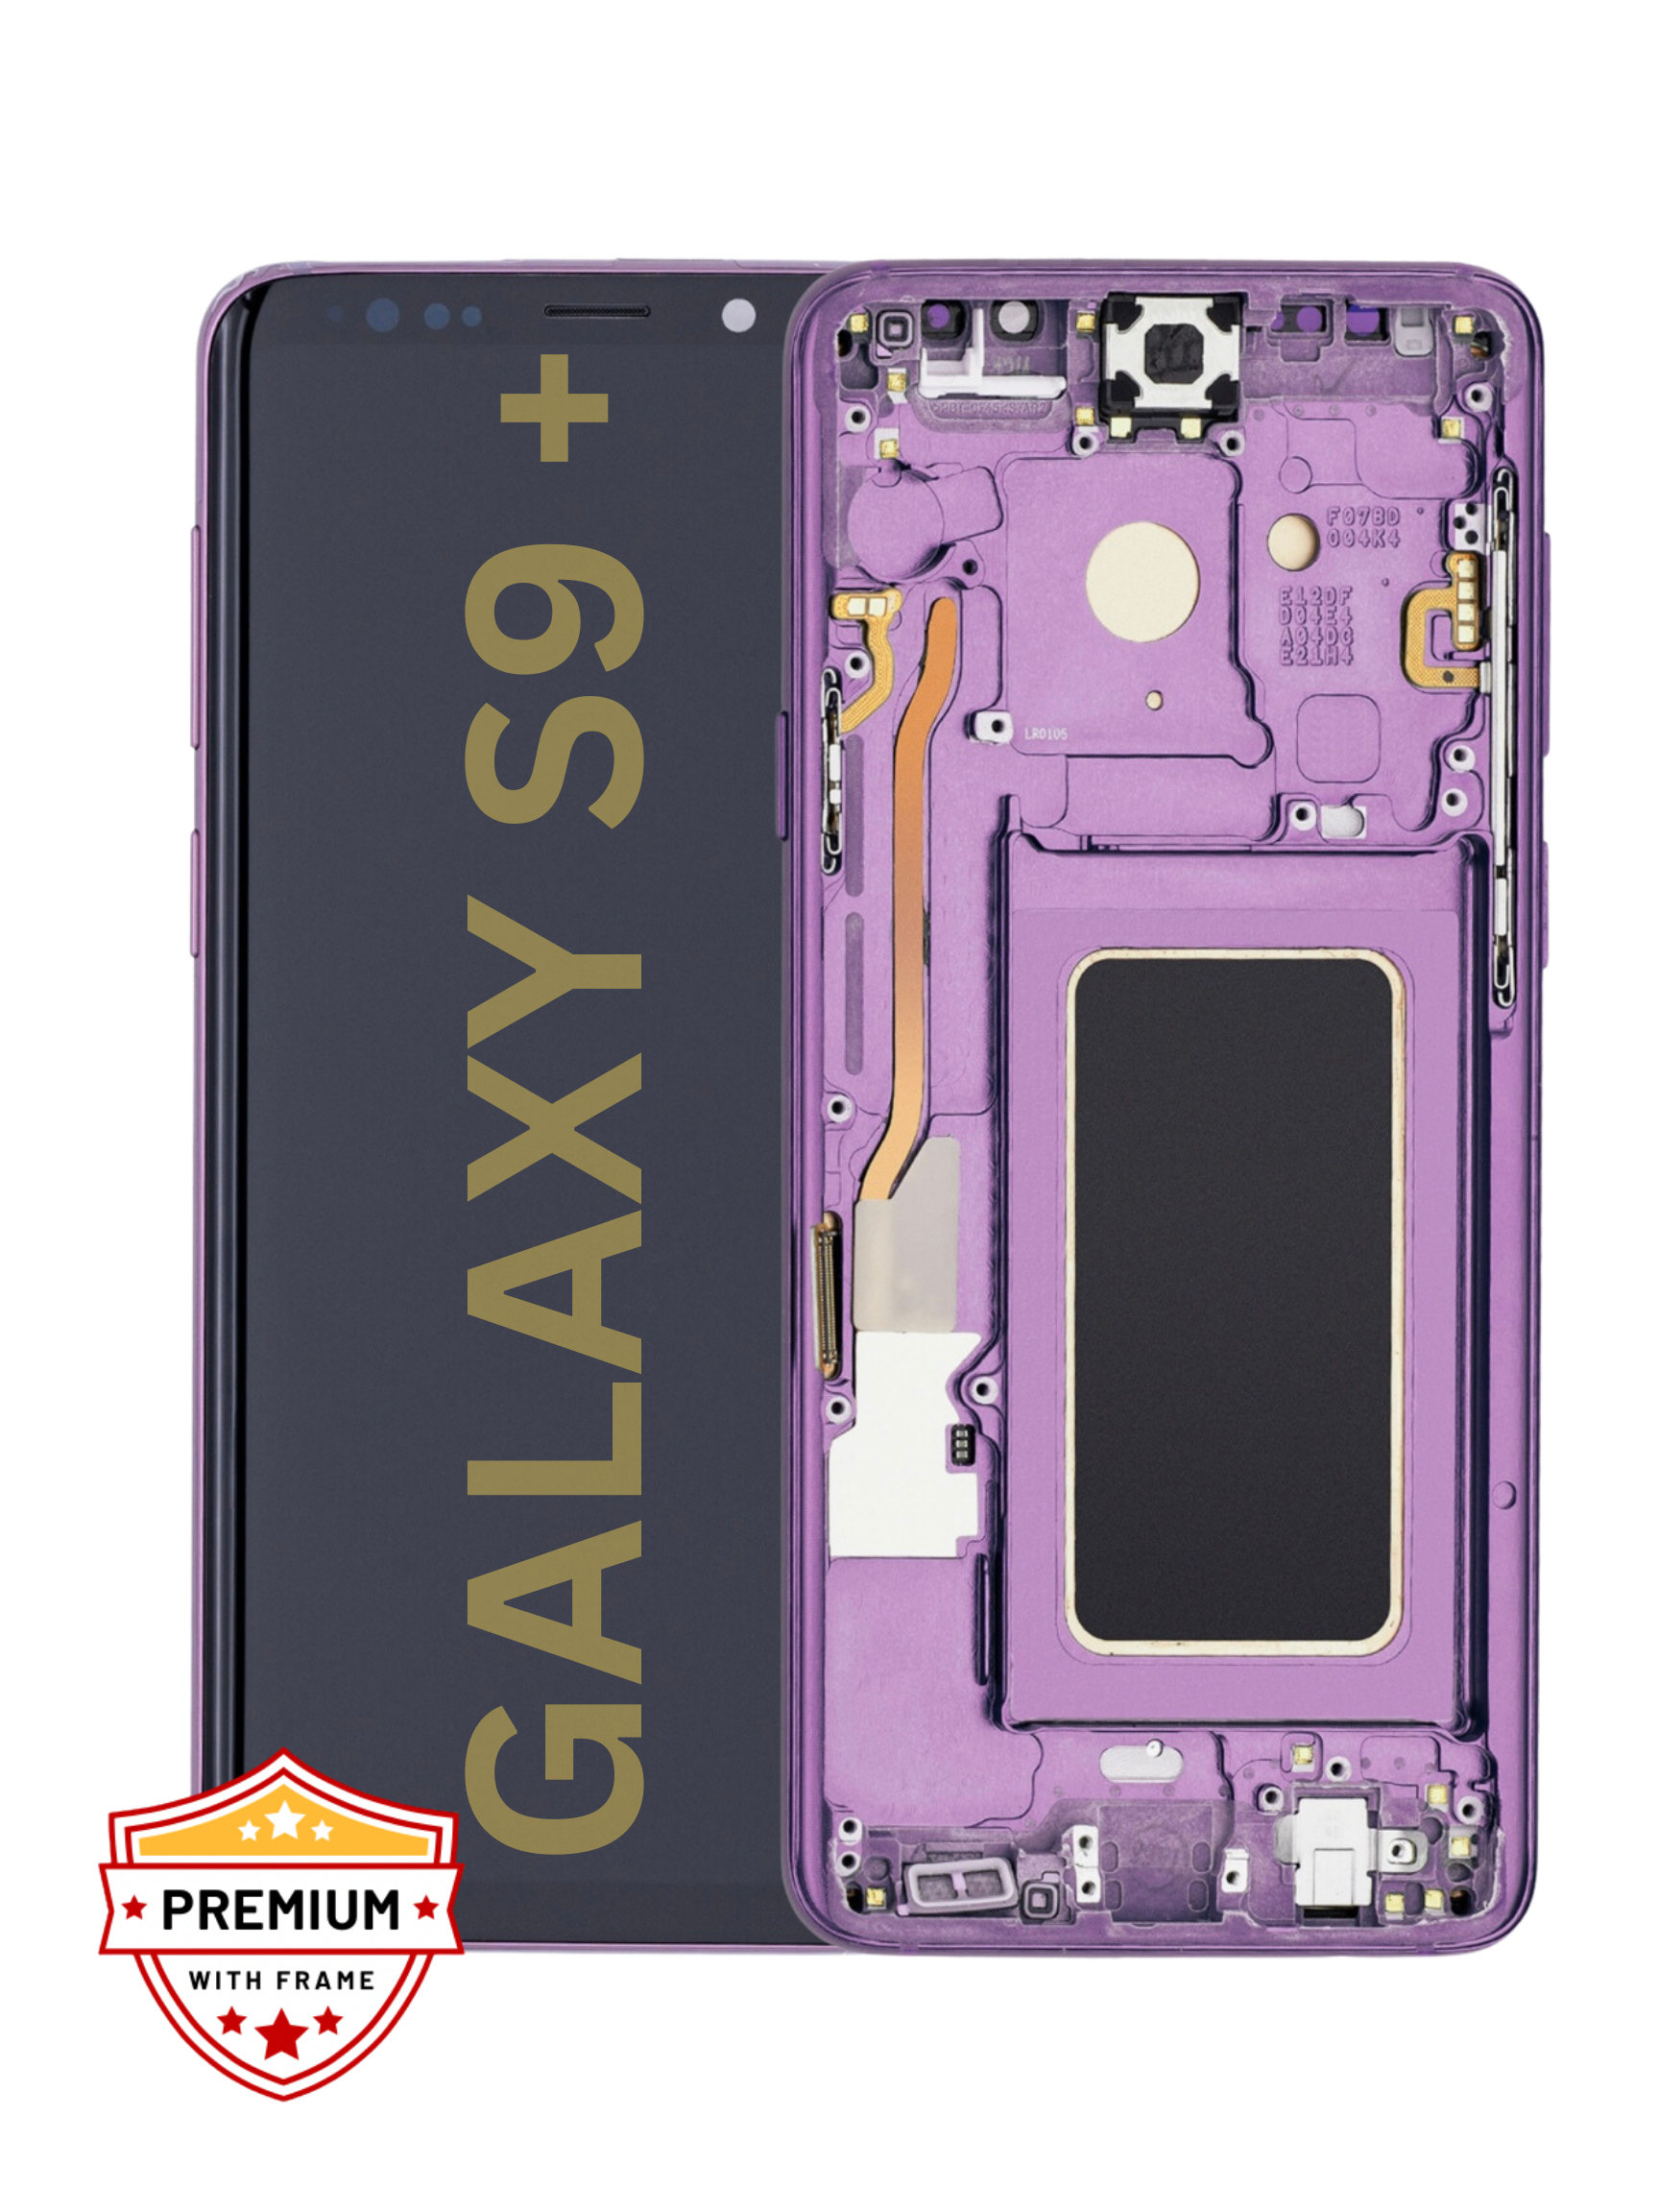 (Refurbished) Samsung Galaxy S9 Plus OLED Display with Frame (Purple)